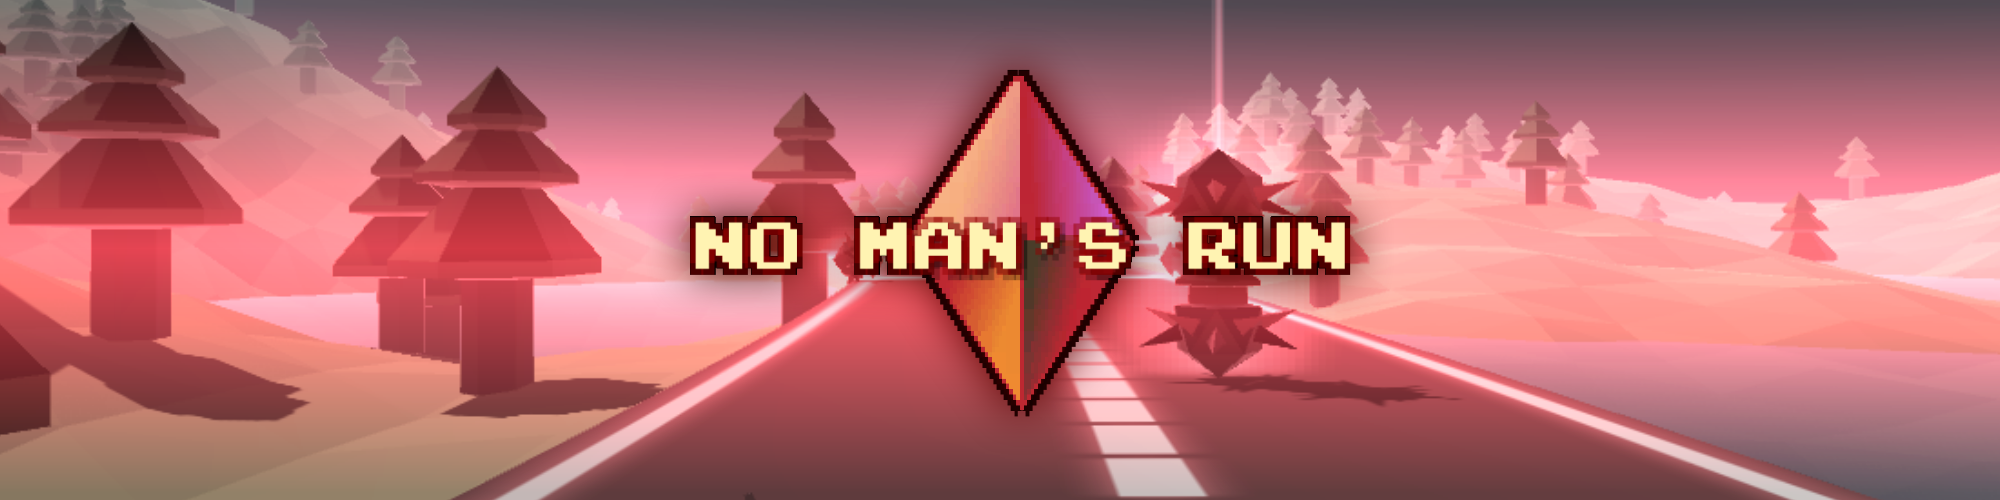 No Man's Run